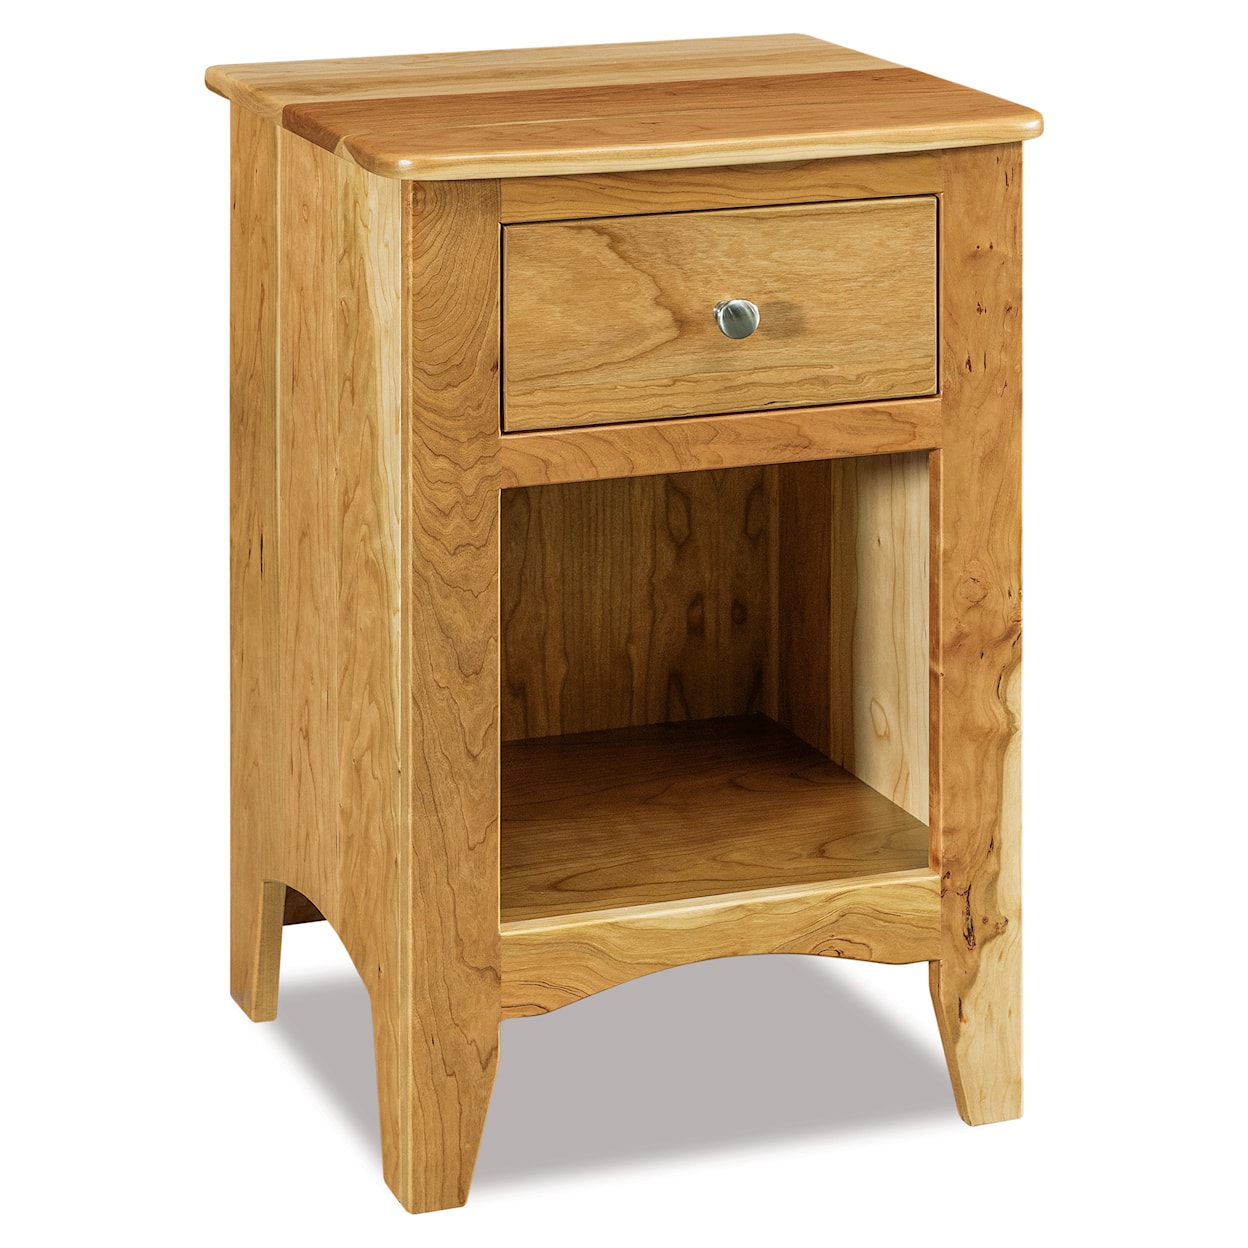 Archbold Furniture Bob Timberlake 1-Drawer Nightstand